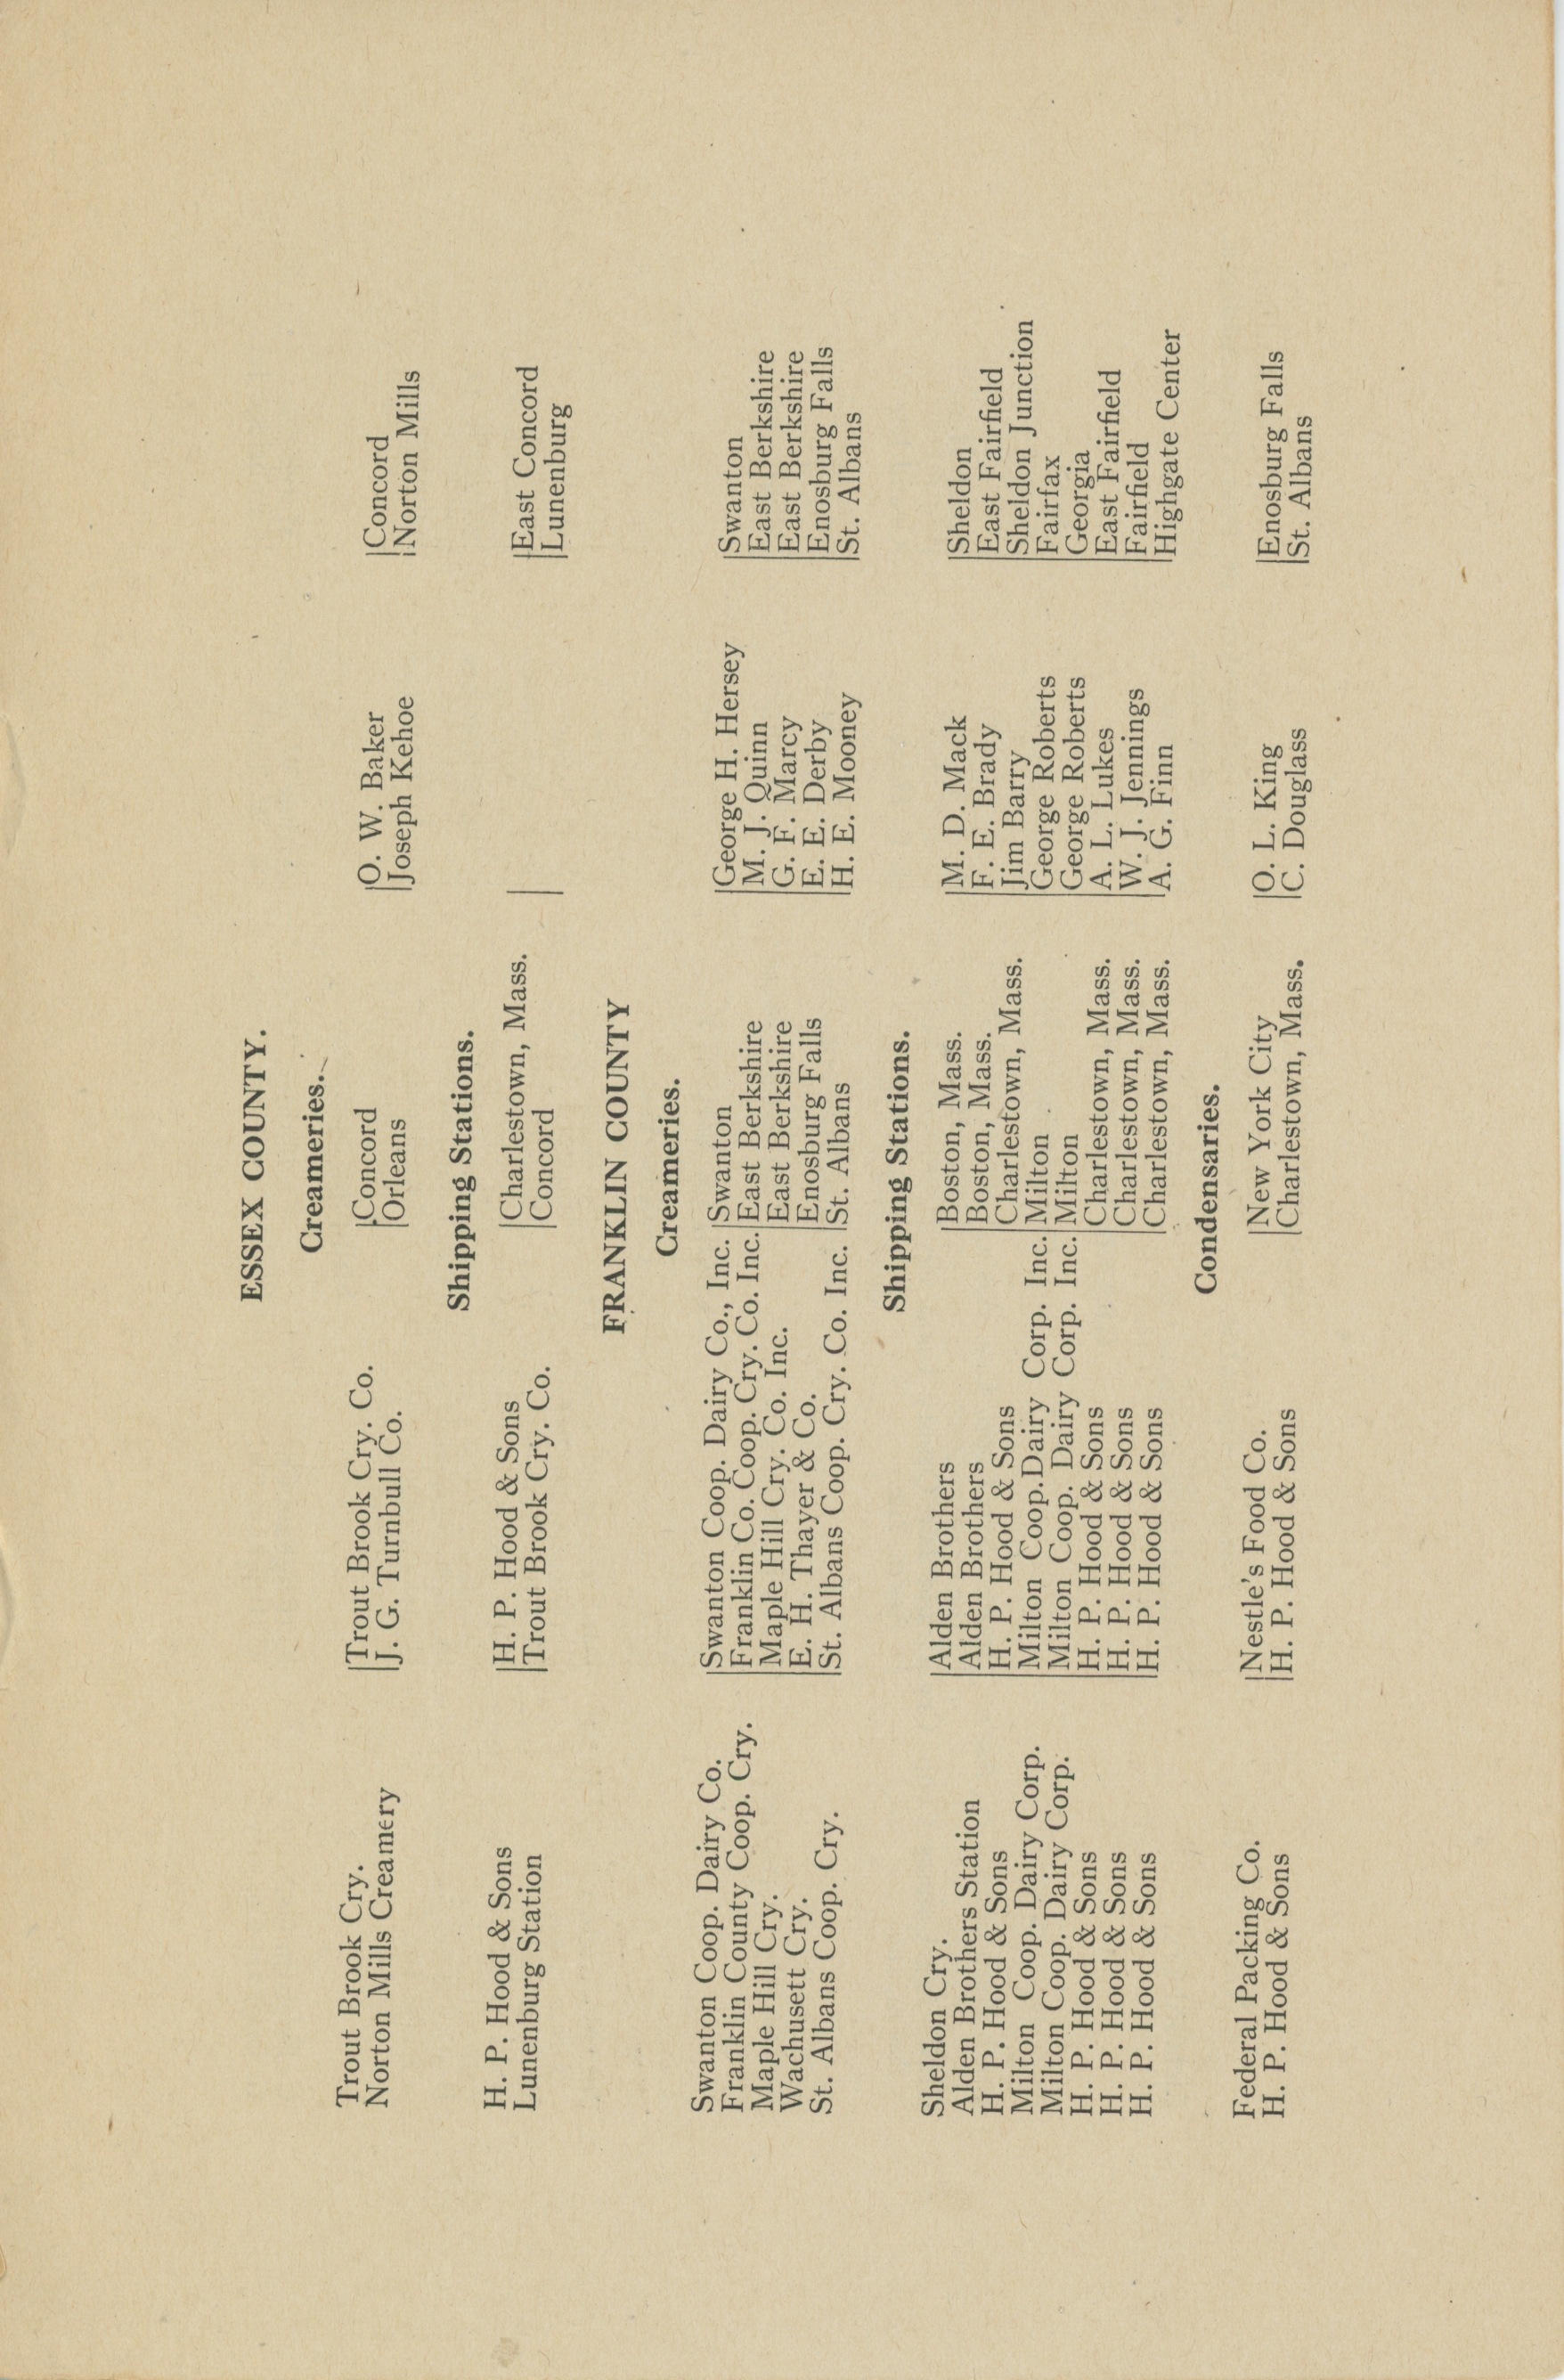 ced-1921-statedepartment-list of creameriespg4.jpeg